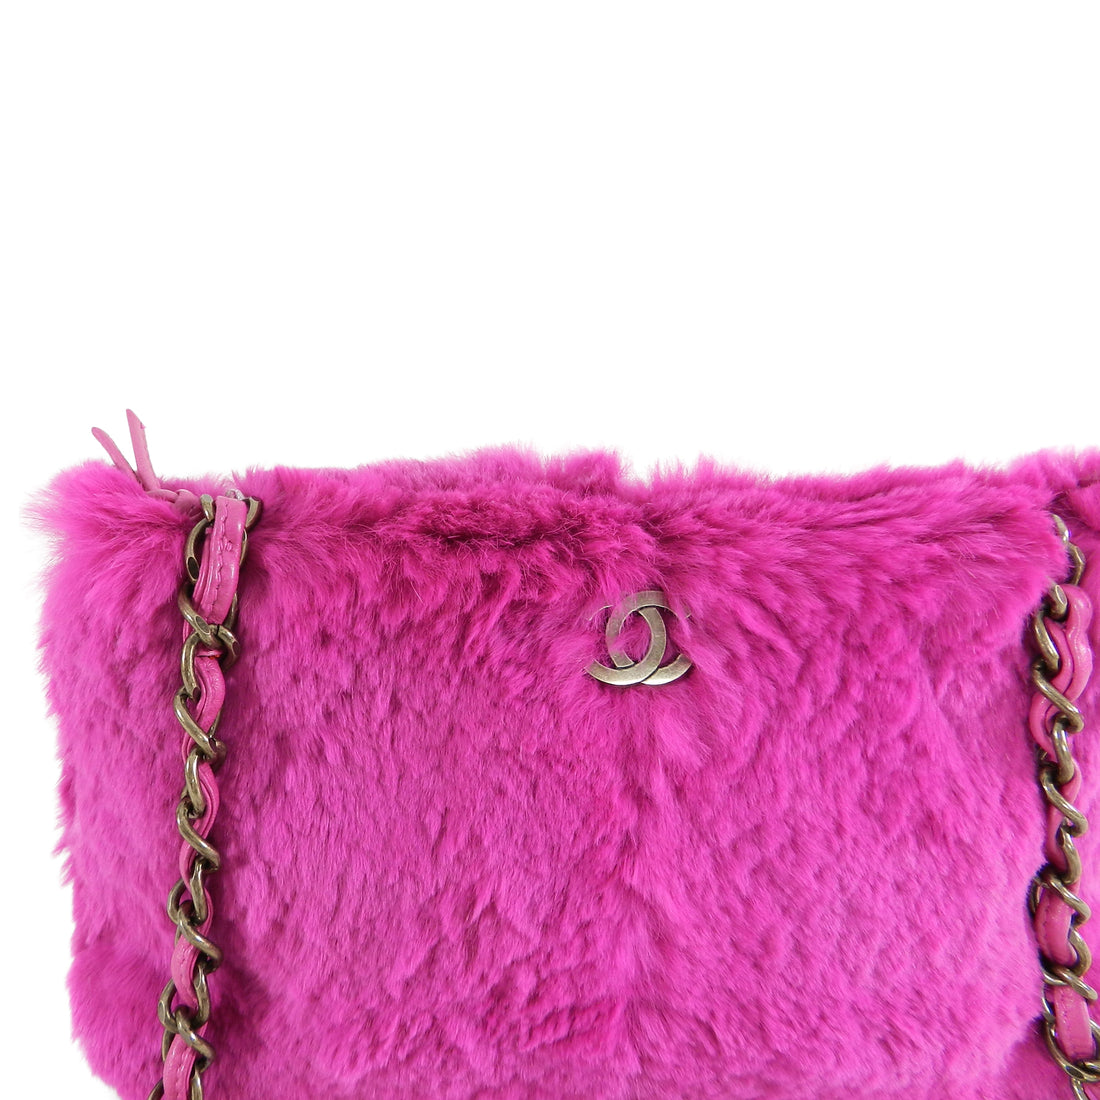 Chanel Hot Pink Rabbit Fur CC Logo Bag with Chain Strap